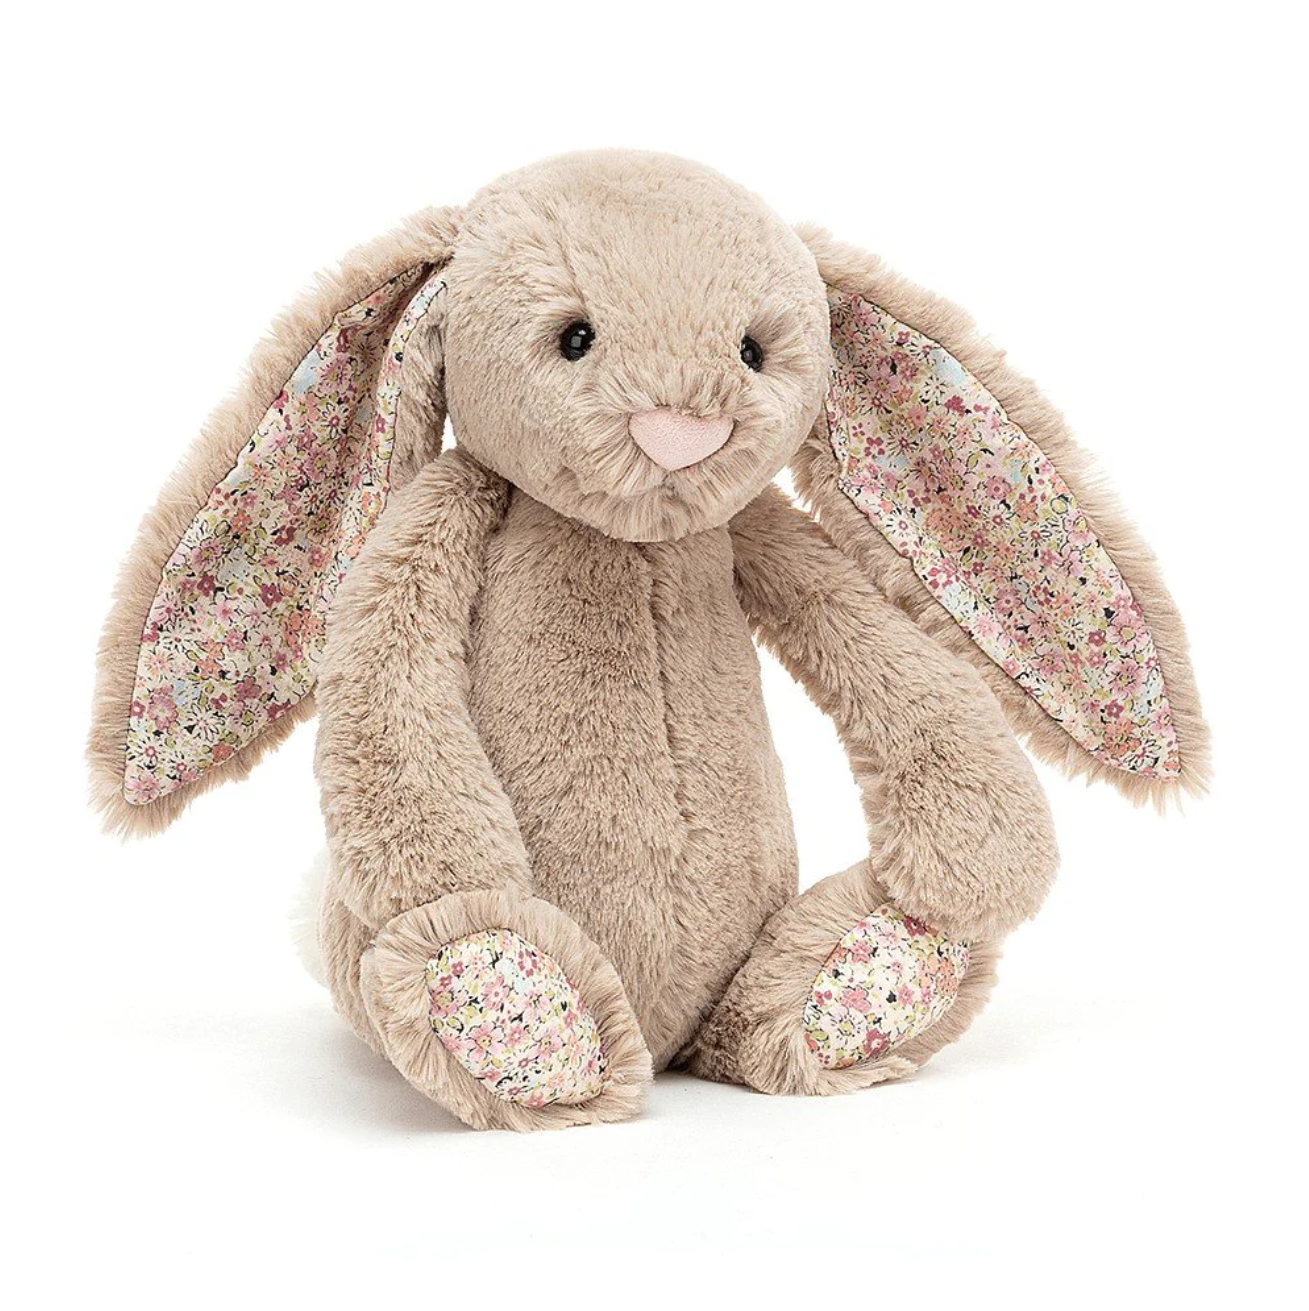 Jellycat Bashful Bunny Medium Soft Toys in Blossom Bea Beige at Wrapsody